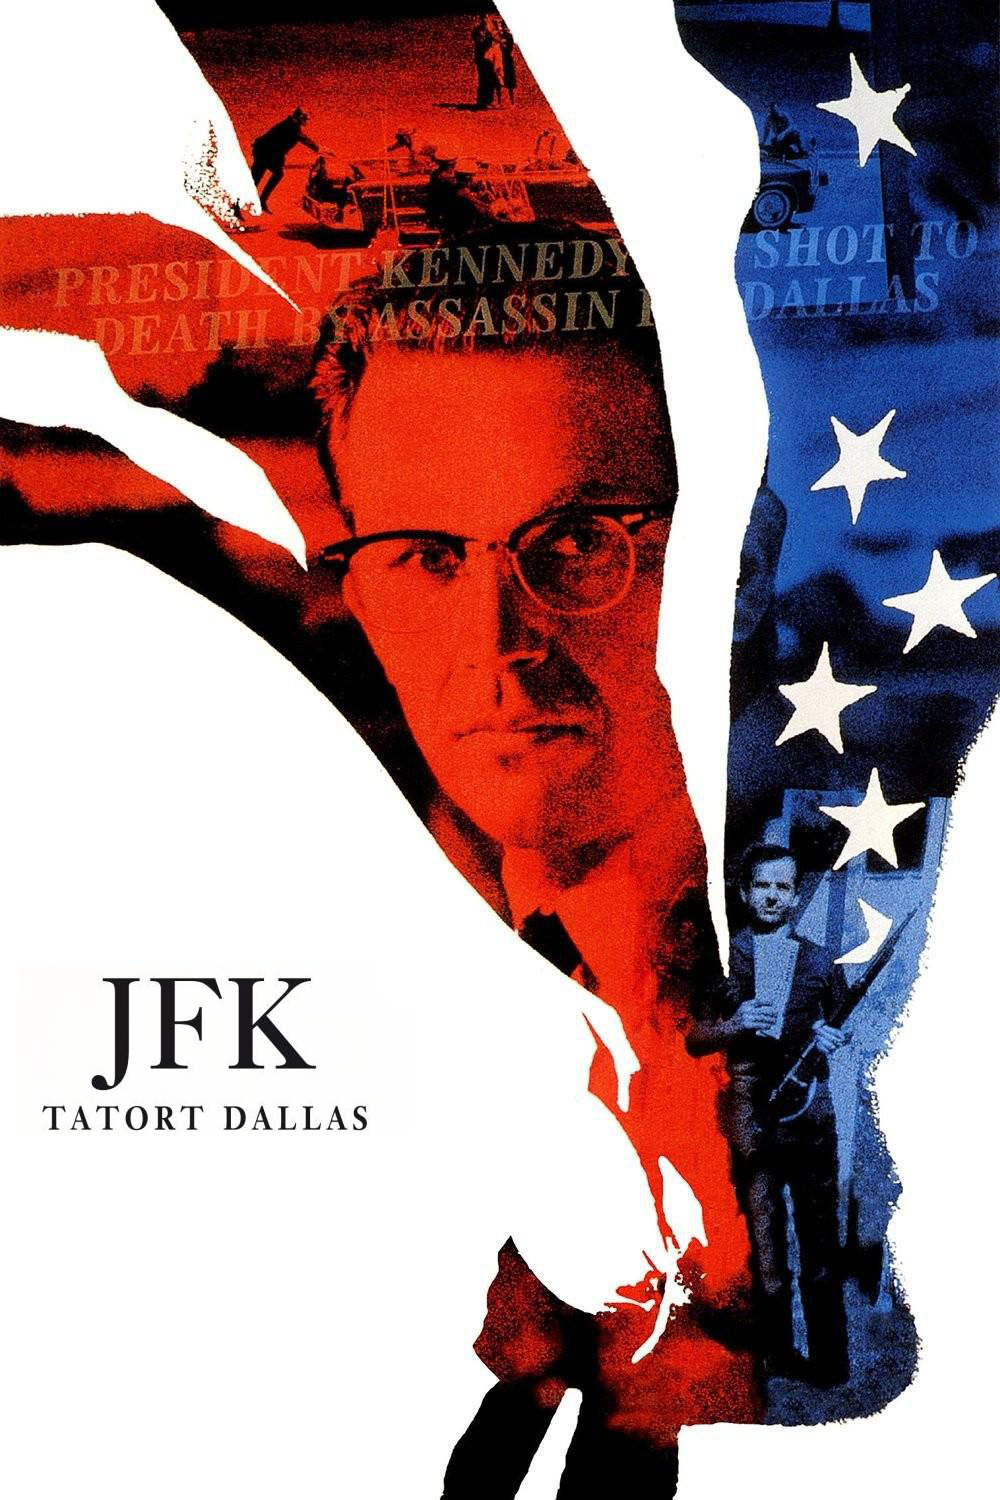 Plakat von "JFK - Tatort Dallas"